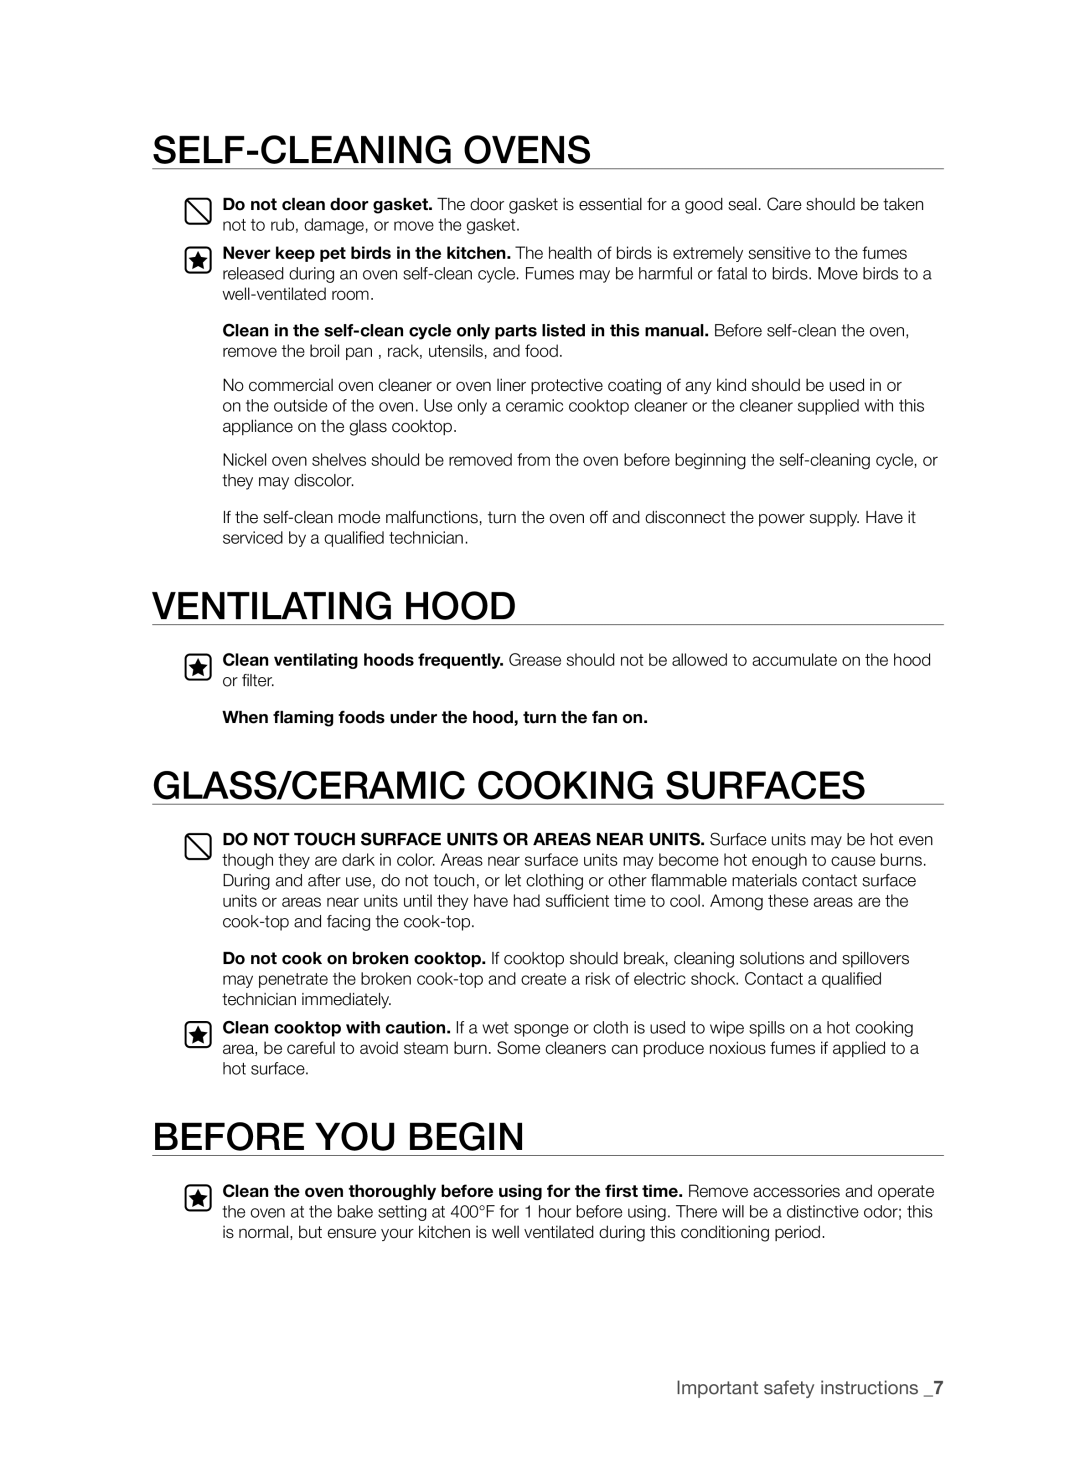 Samsung FTQ352IWUW, FTQ352IWUB Self-Cleaningovens, Ventilating Hood, Glass/Ceramic Cooking Surfaces, before you begin 